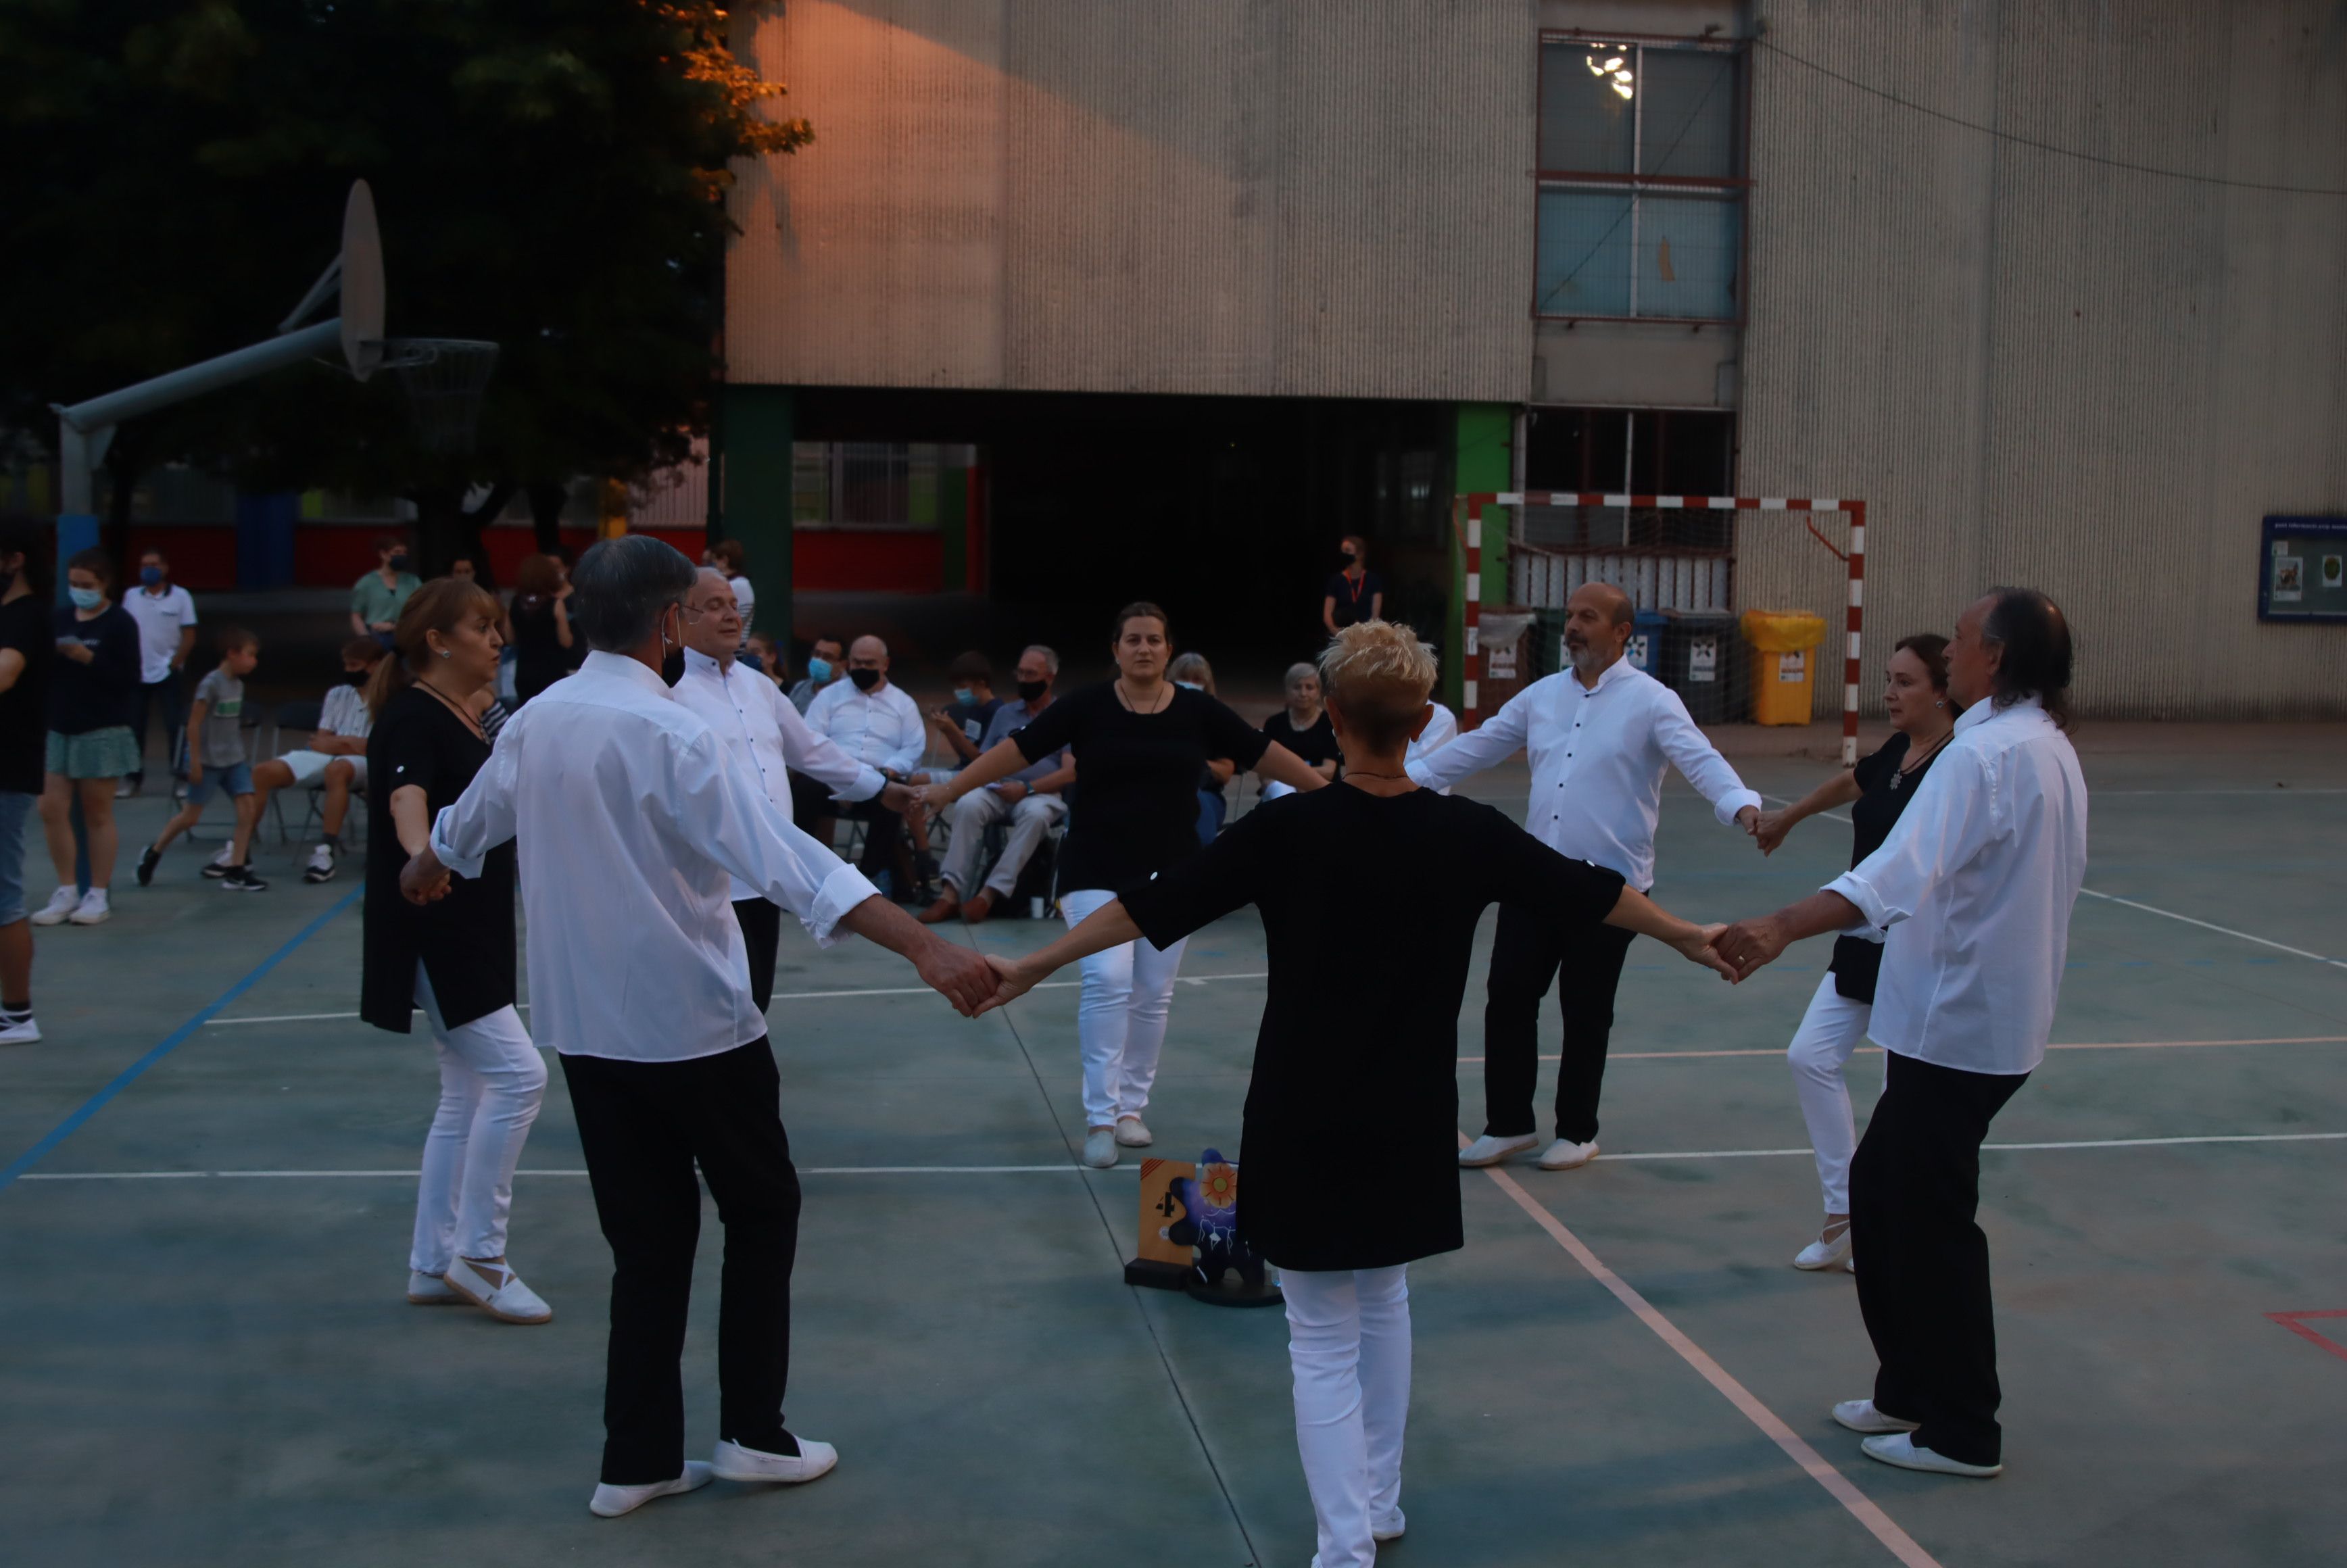 Concurs de colles sardanistes per Festa Major a Rubí. FOTO: Josep Llamas